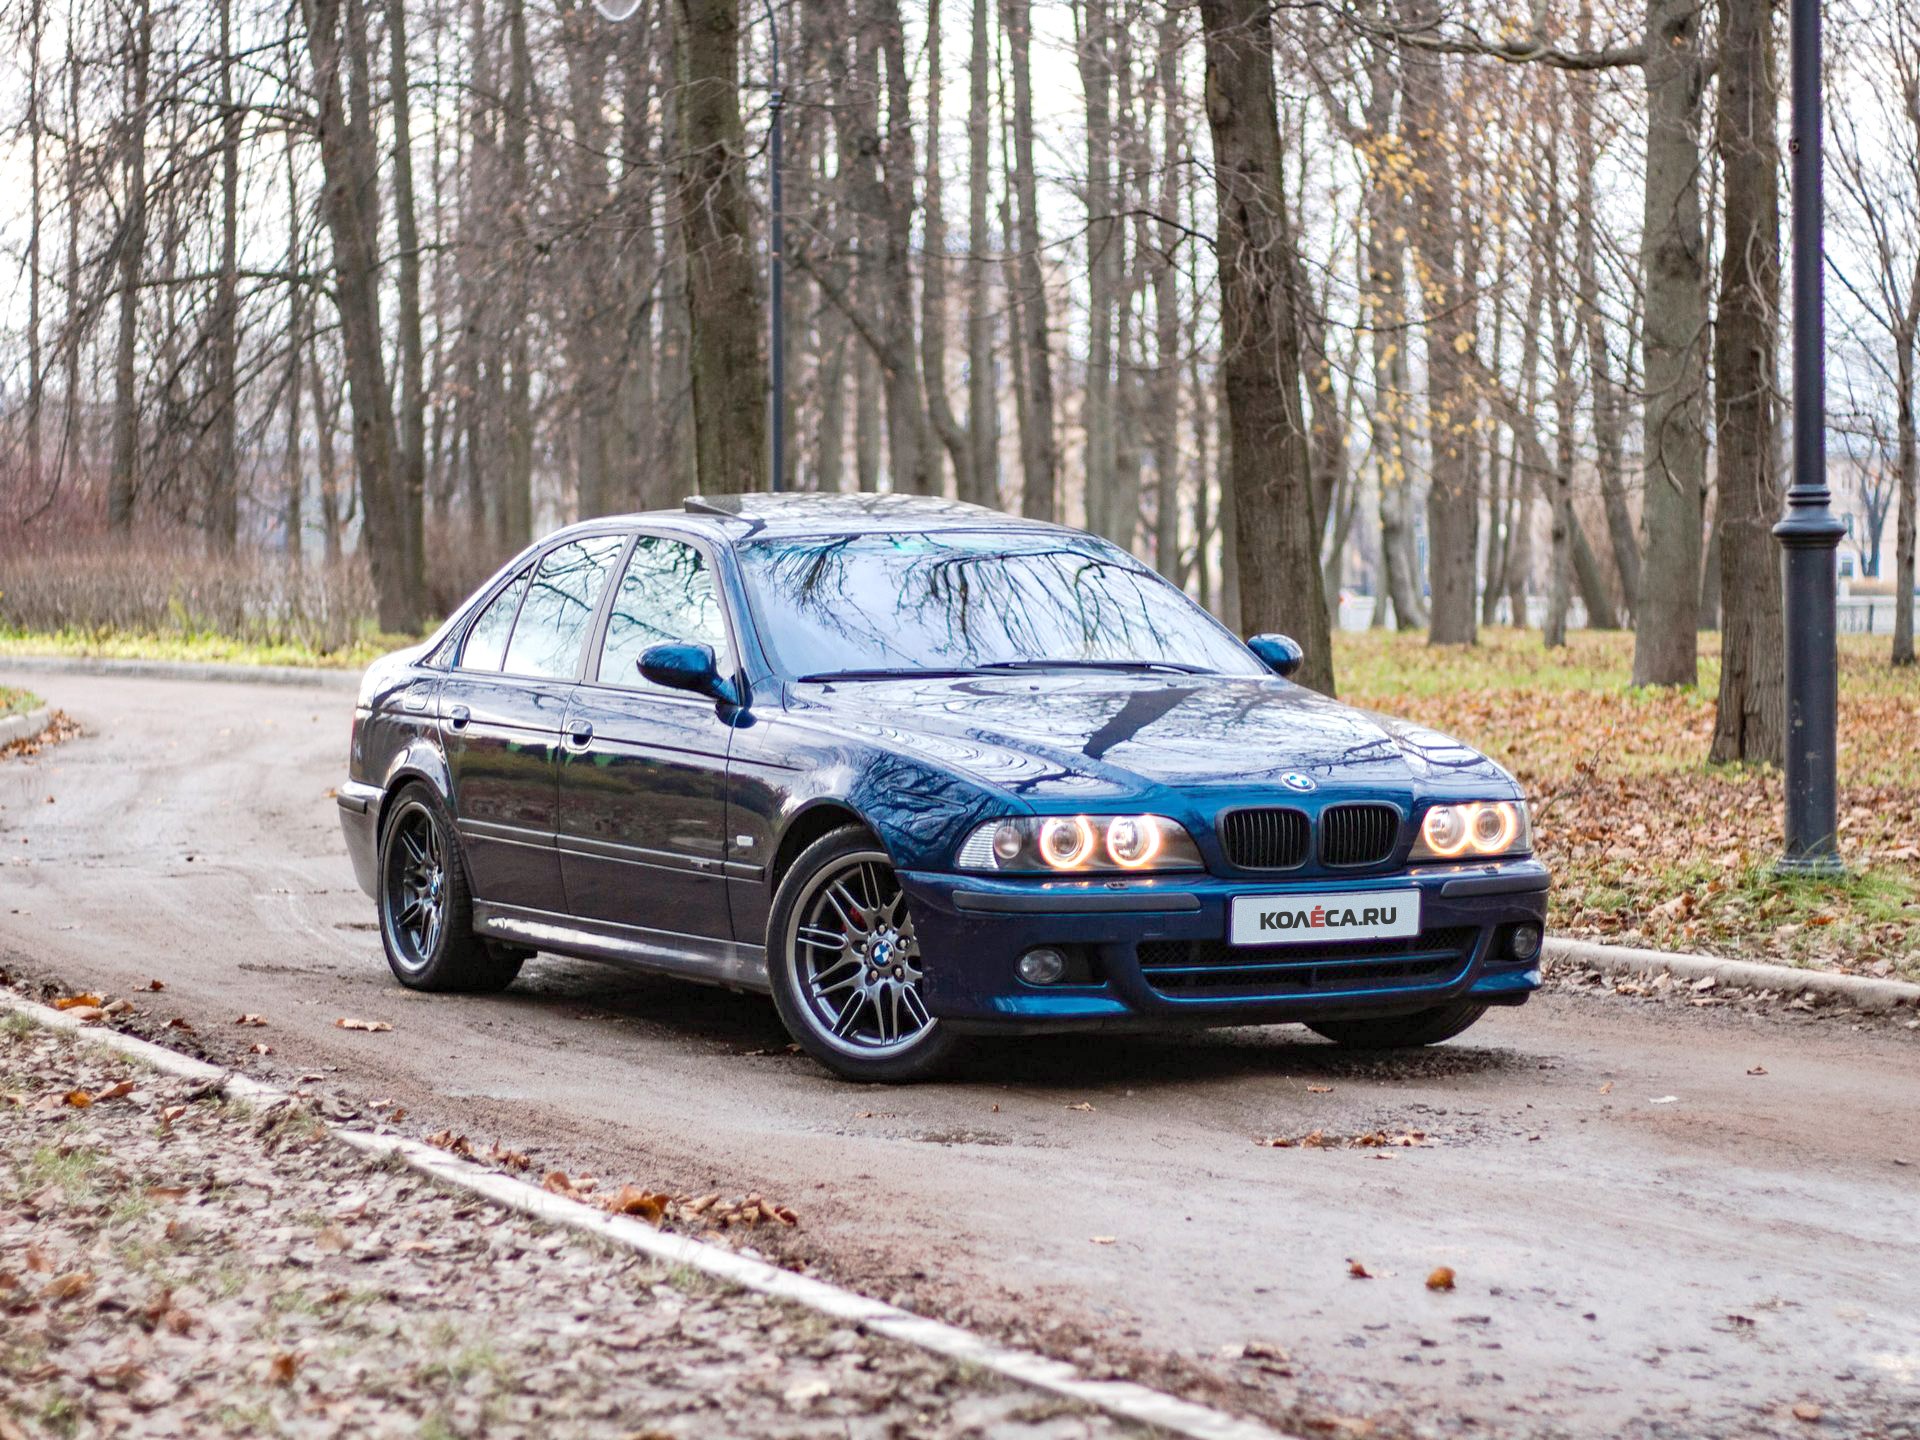    3    BMW 5 series E39 -     